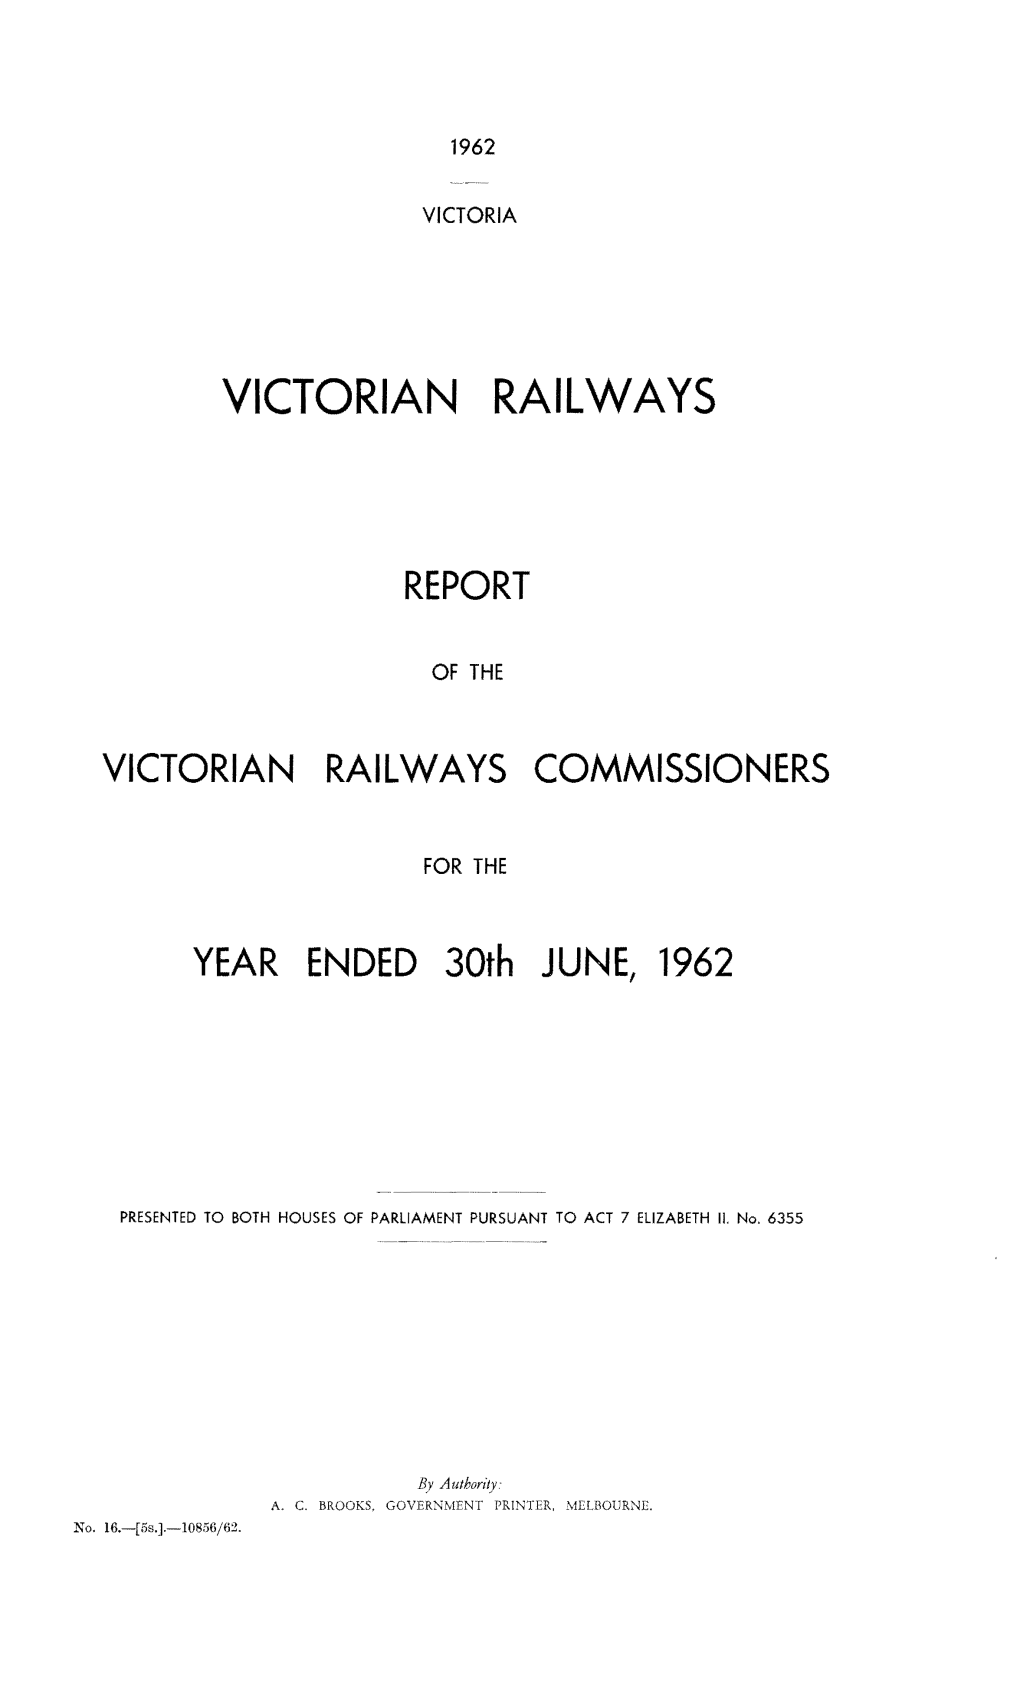 Victorian Railways